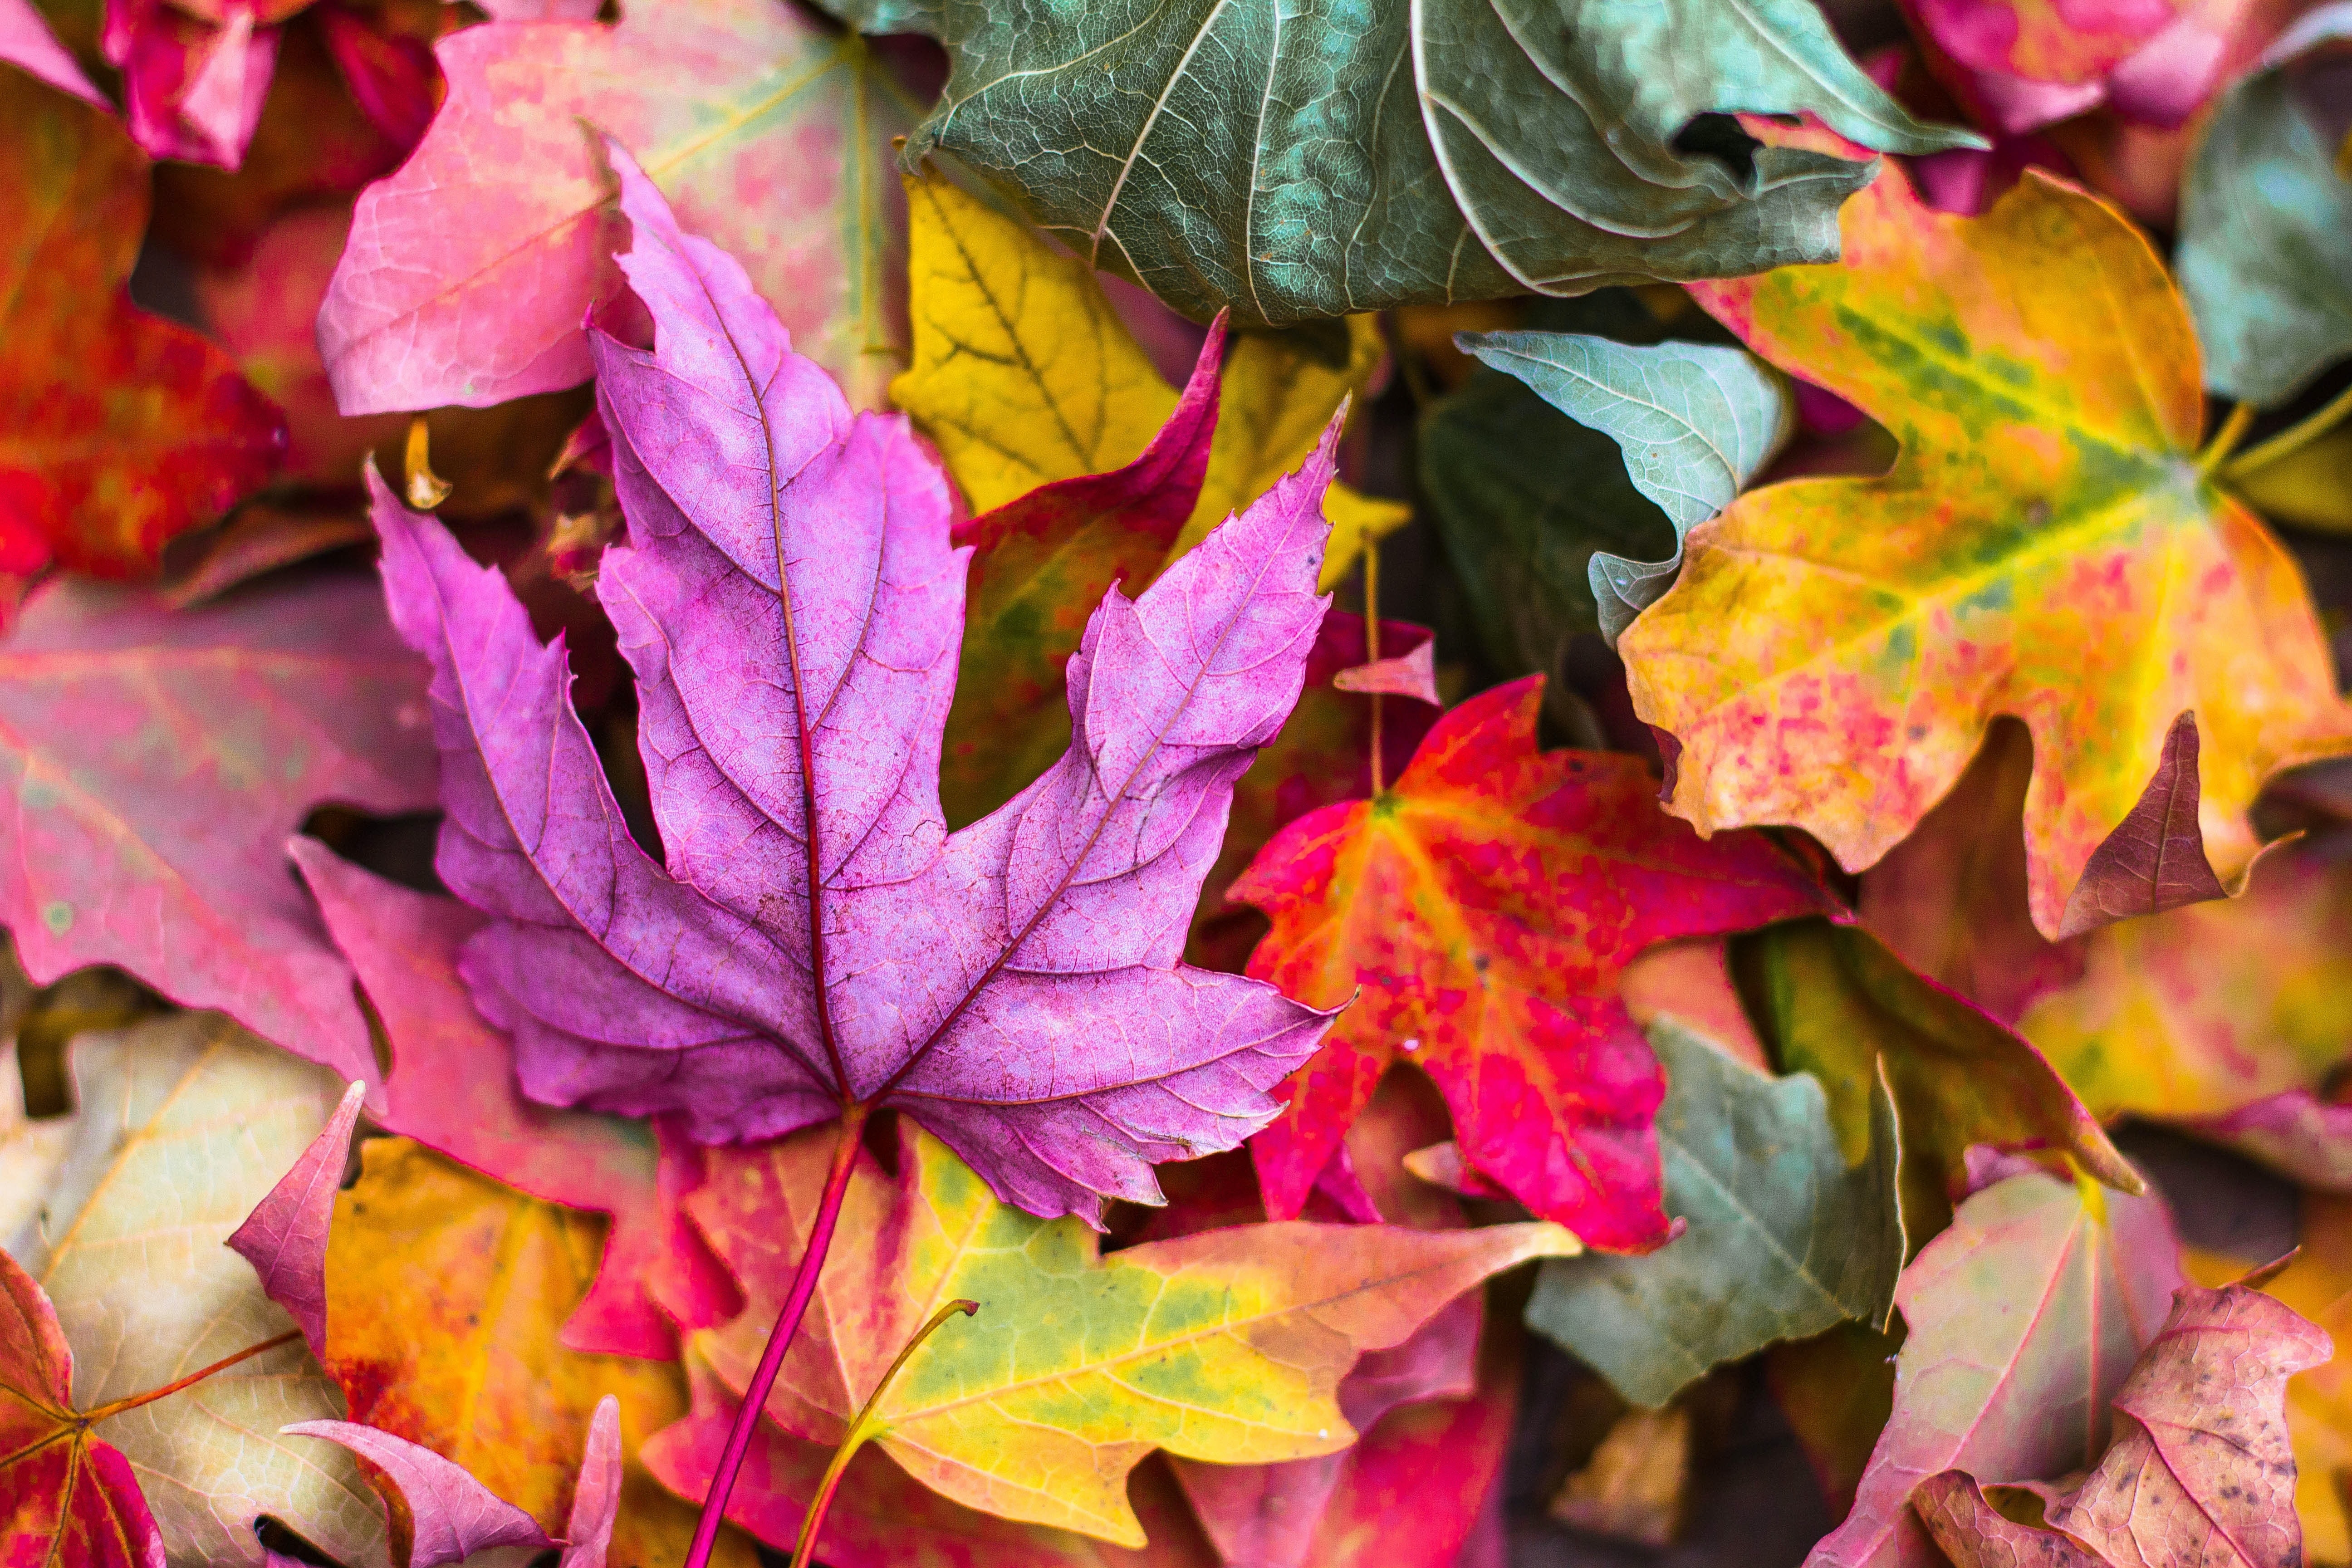 HD wallpaper, 5K, Autumn Leaves, Leaf Background, Fallen Leaves, Seasons, Purple Leaf, Texture, Maple Leaves